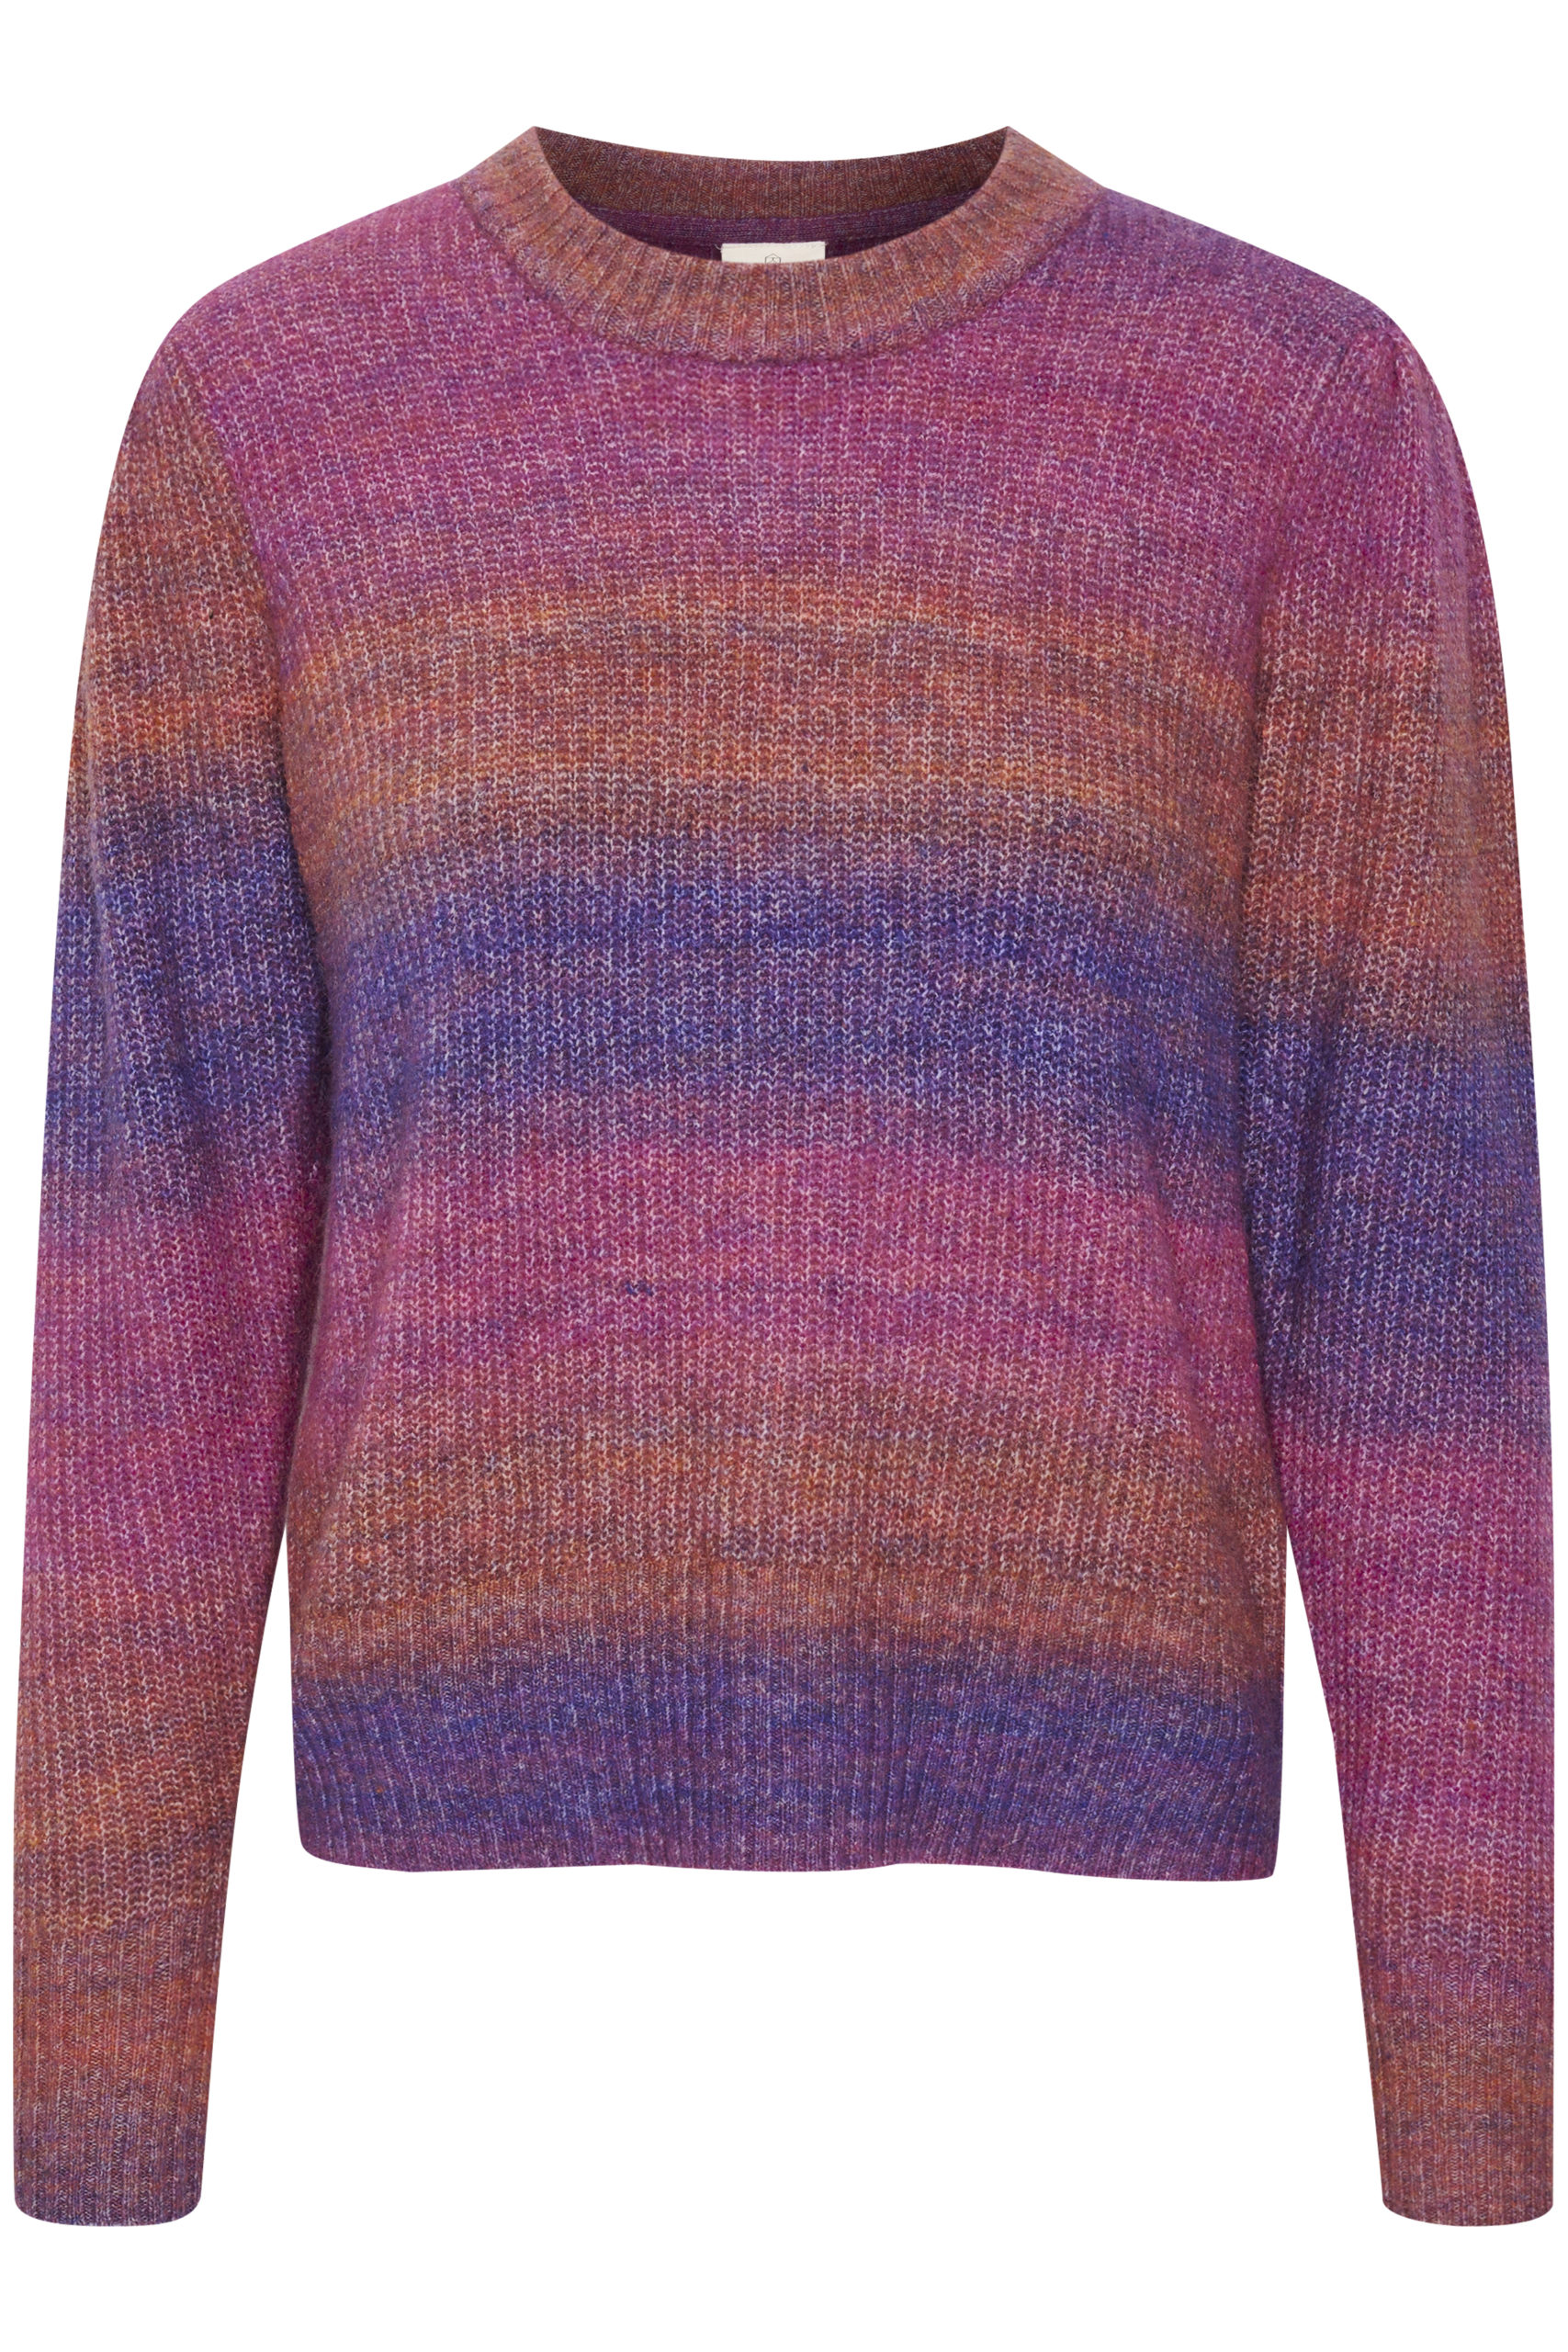 KAmichela Knit Pullover item